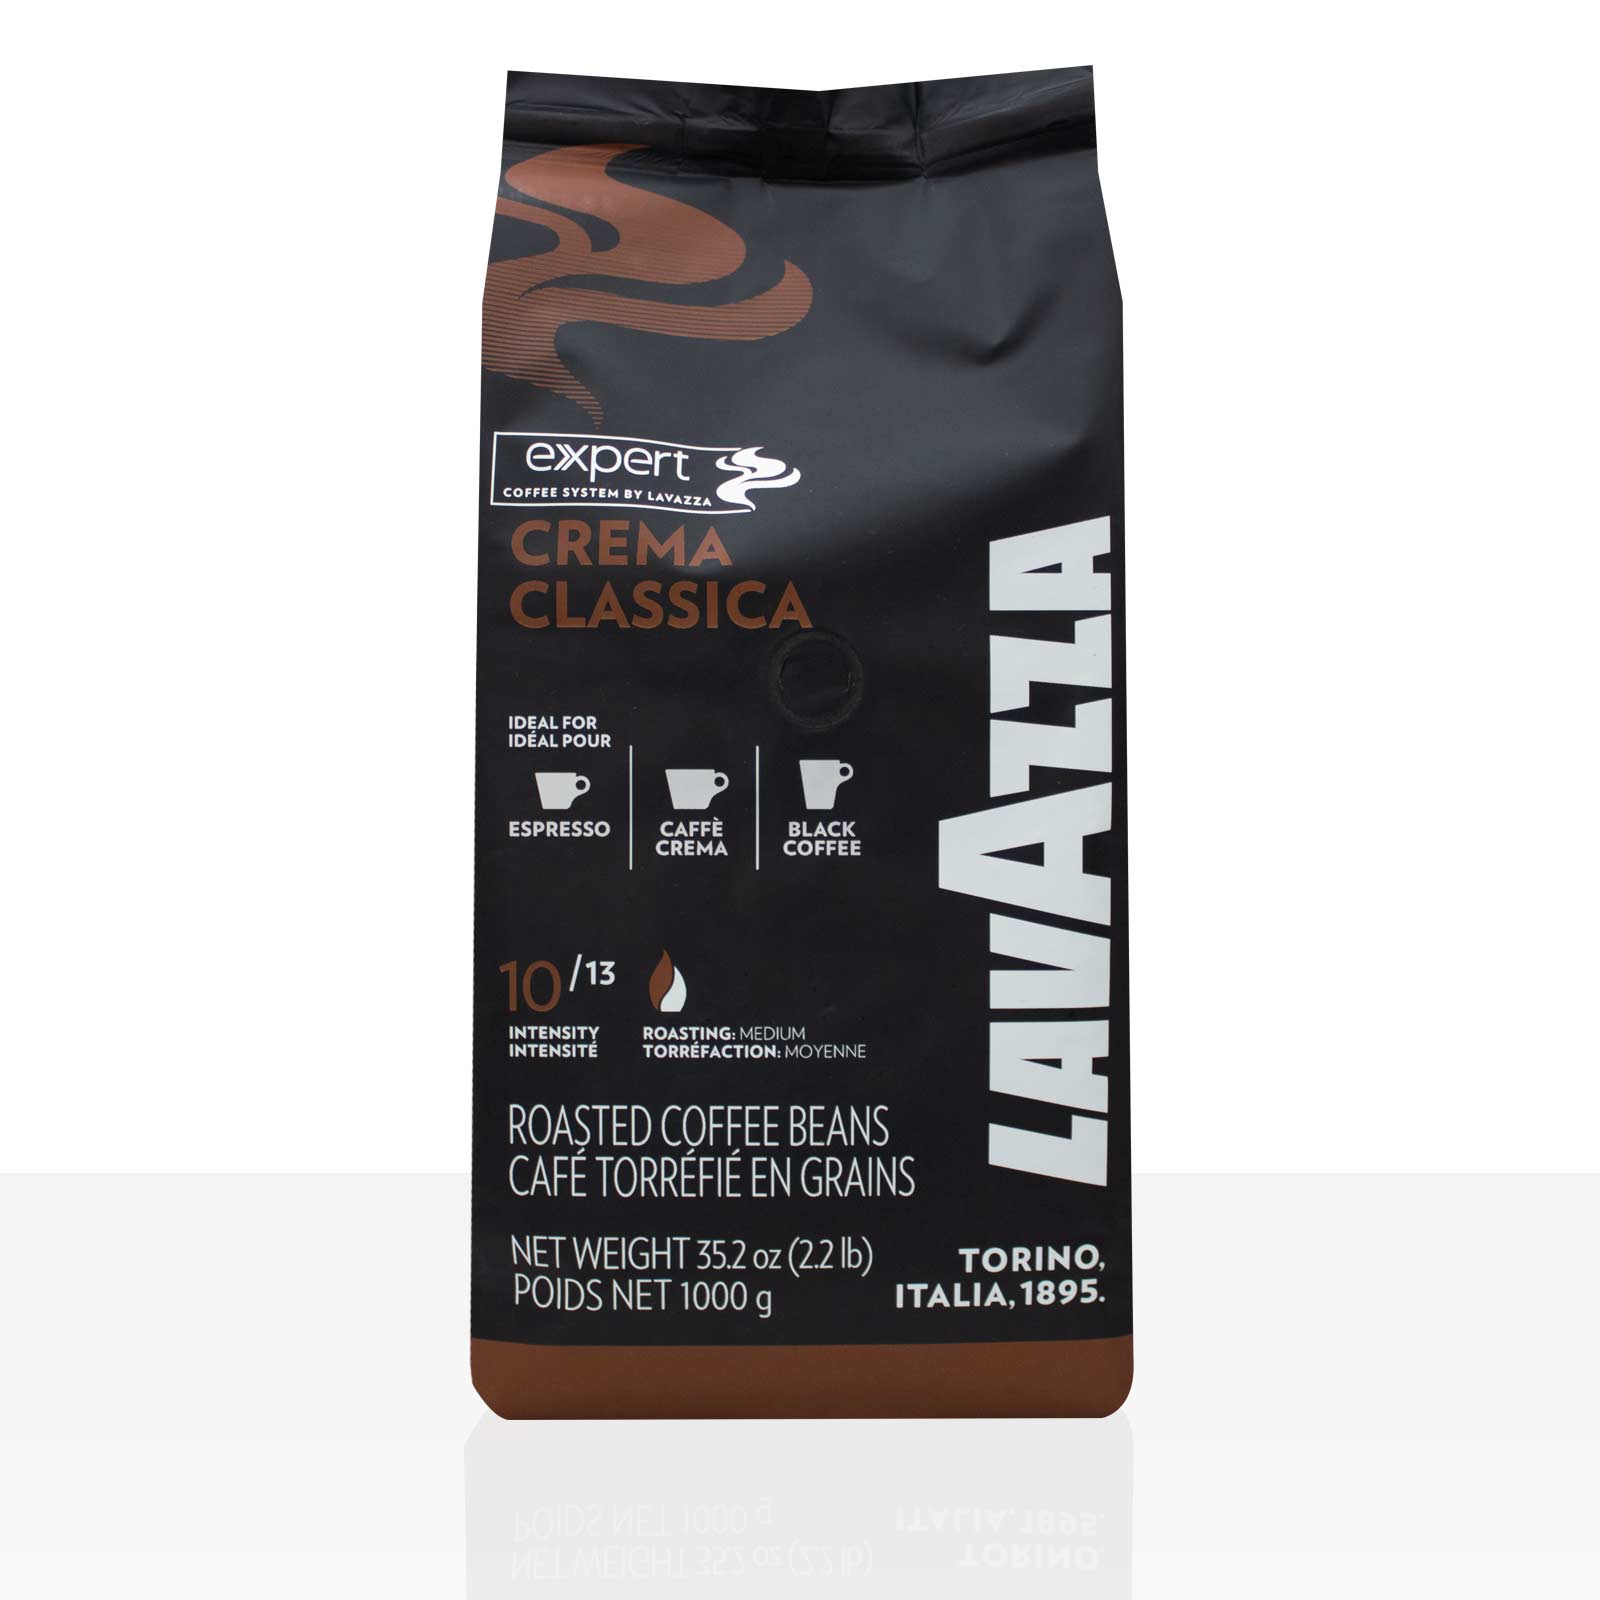 Lavazza Expert Espresso Crema Classica - 6 x 1kg ganze Kaffee-Bohne